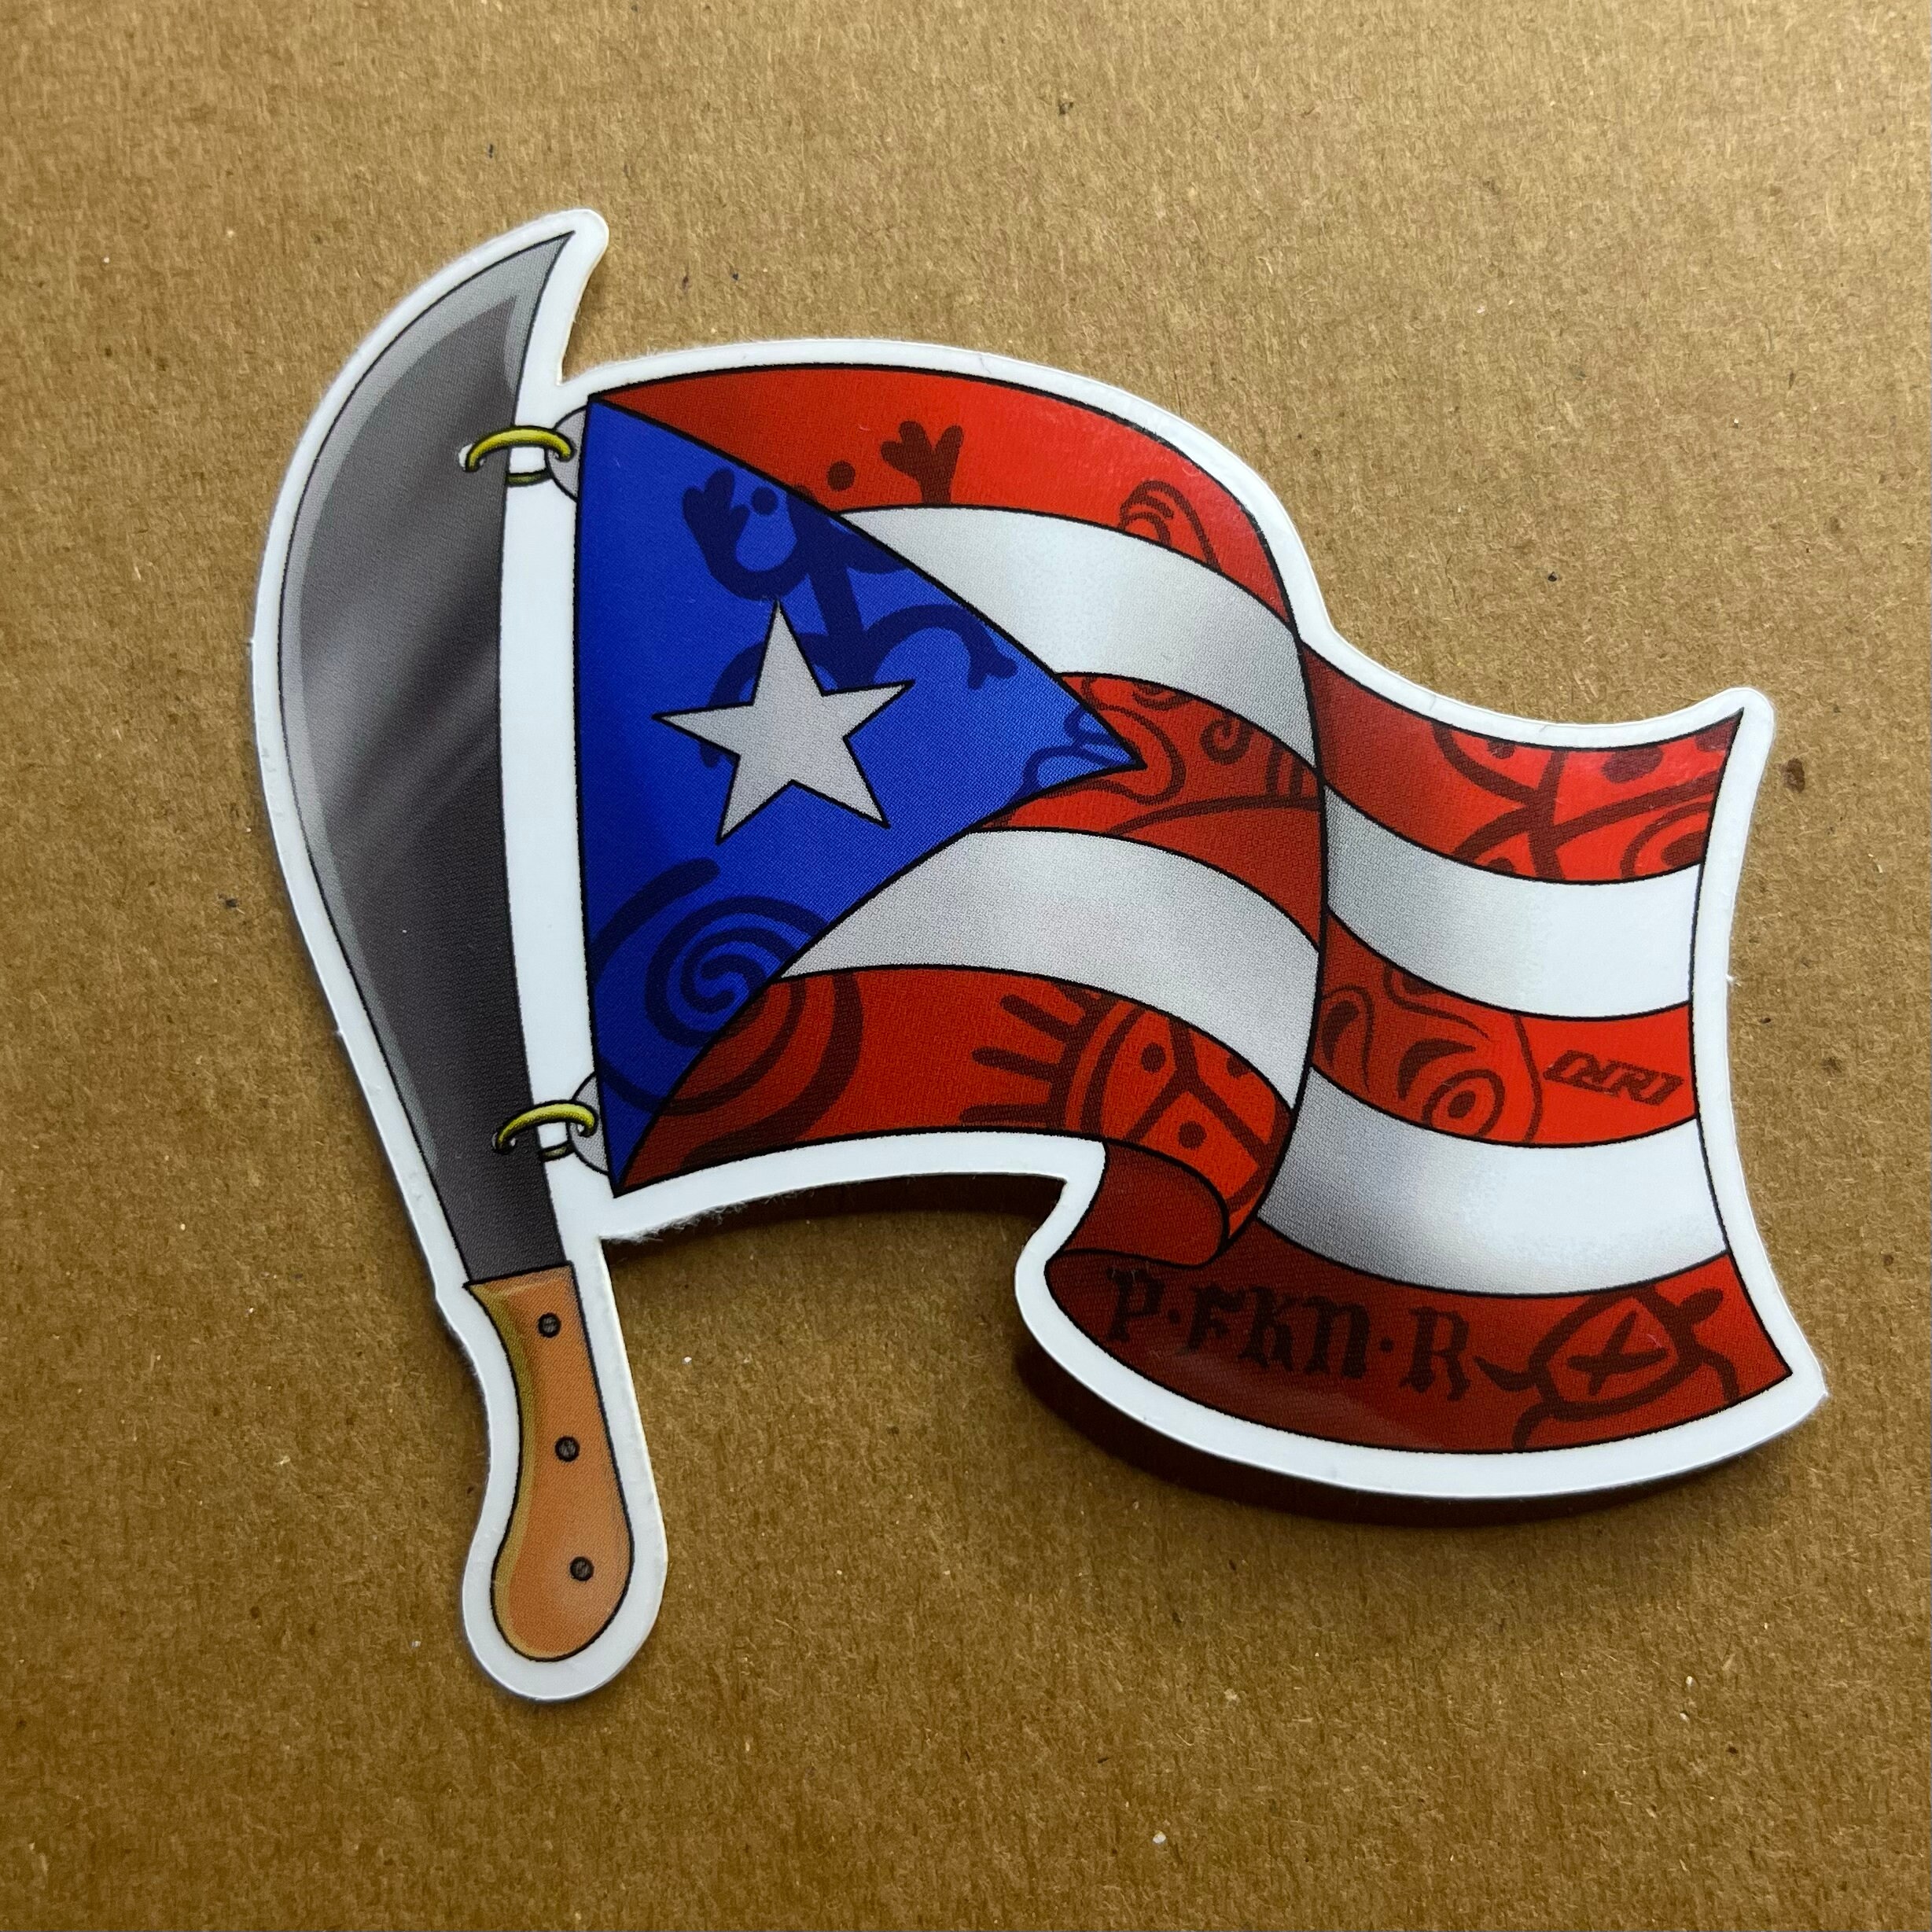 Puerto Rico Scholarship Fund – Boricua, Poder, Amor Signature Embroidered  Hoodies - Teerico